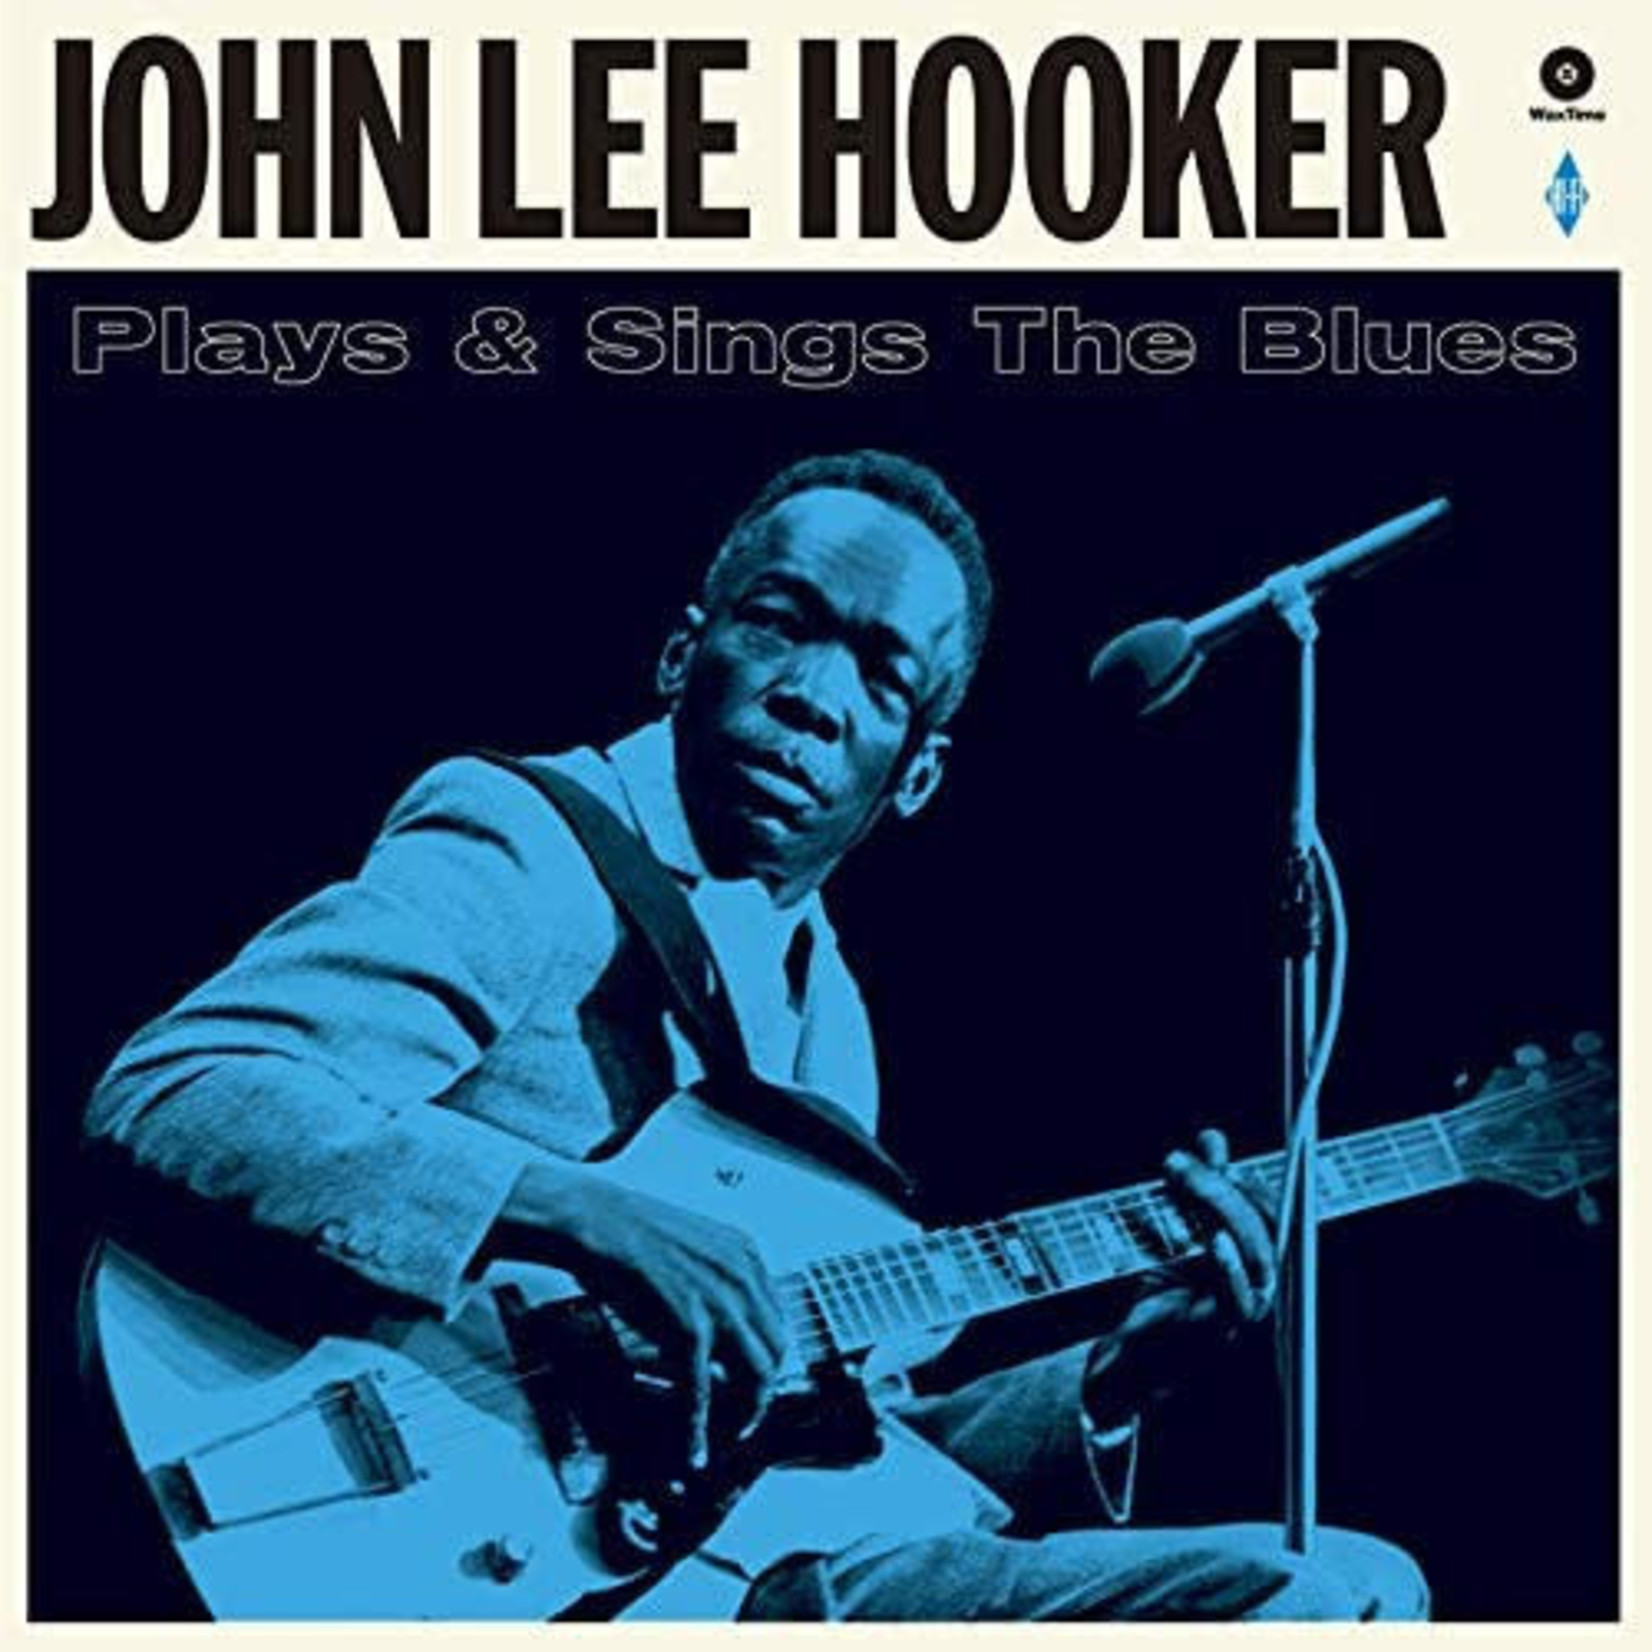 [New] John Lee Hooker - Plays & Sings The Blues (2 bonus tracks)